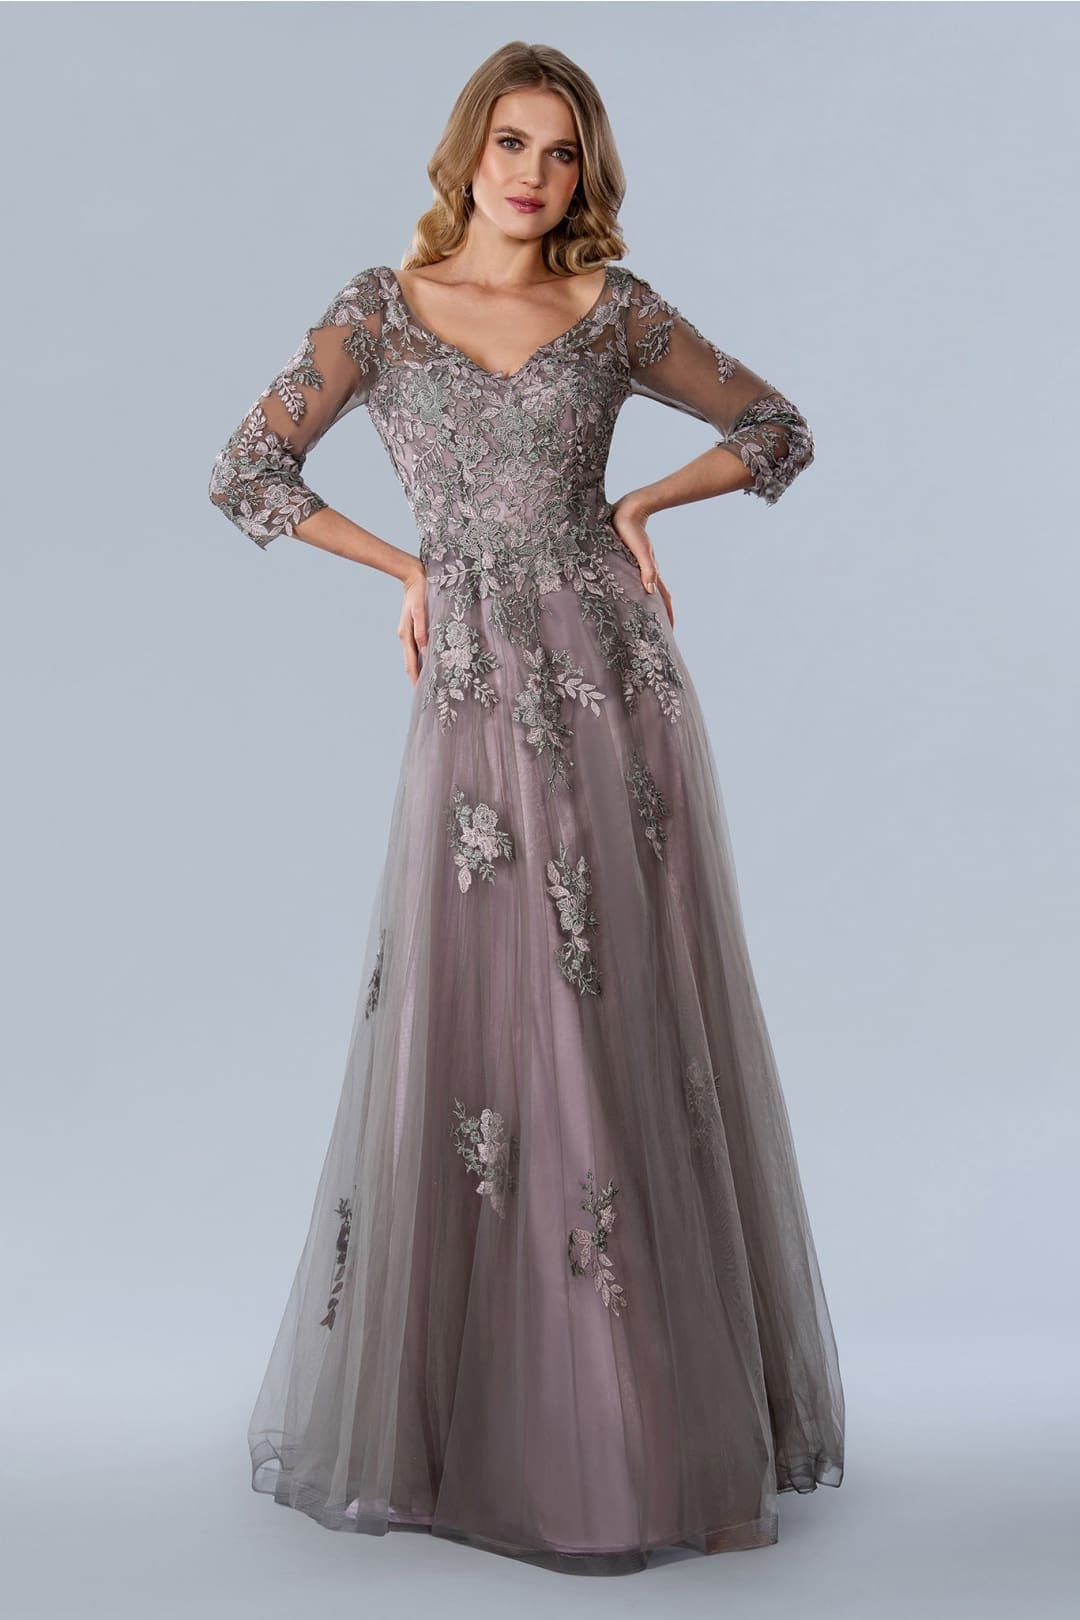 Fairytale 3D Flower Tulle Winter Ball Gown Wedding Dress - Lunss